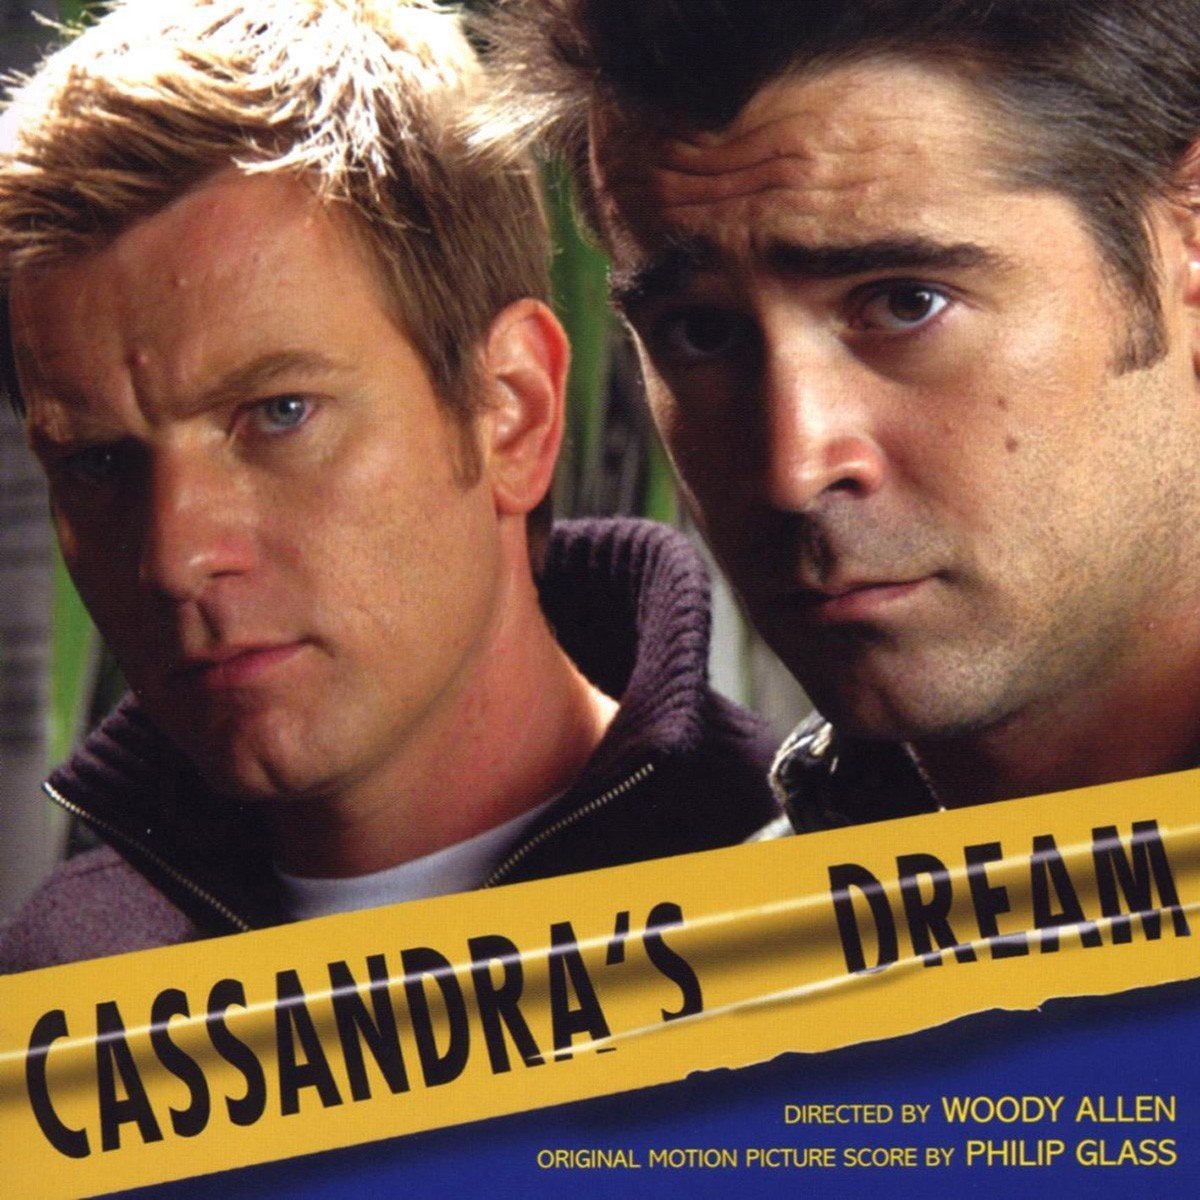 Cassandra’s Dream,  Woody Allen’s Latest Film Premiere in Spain: A Review